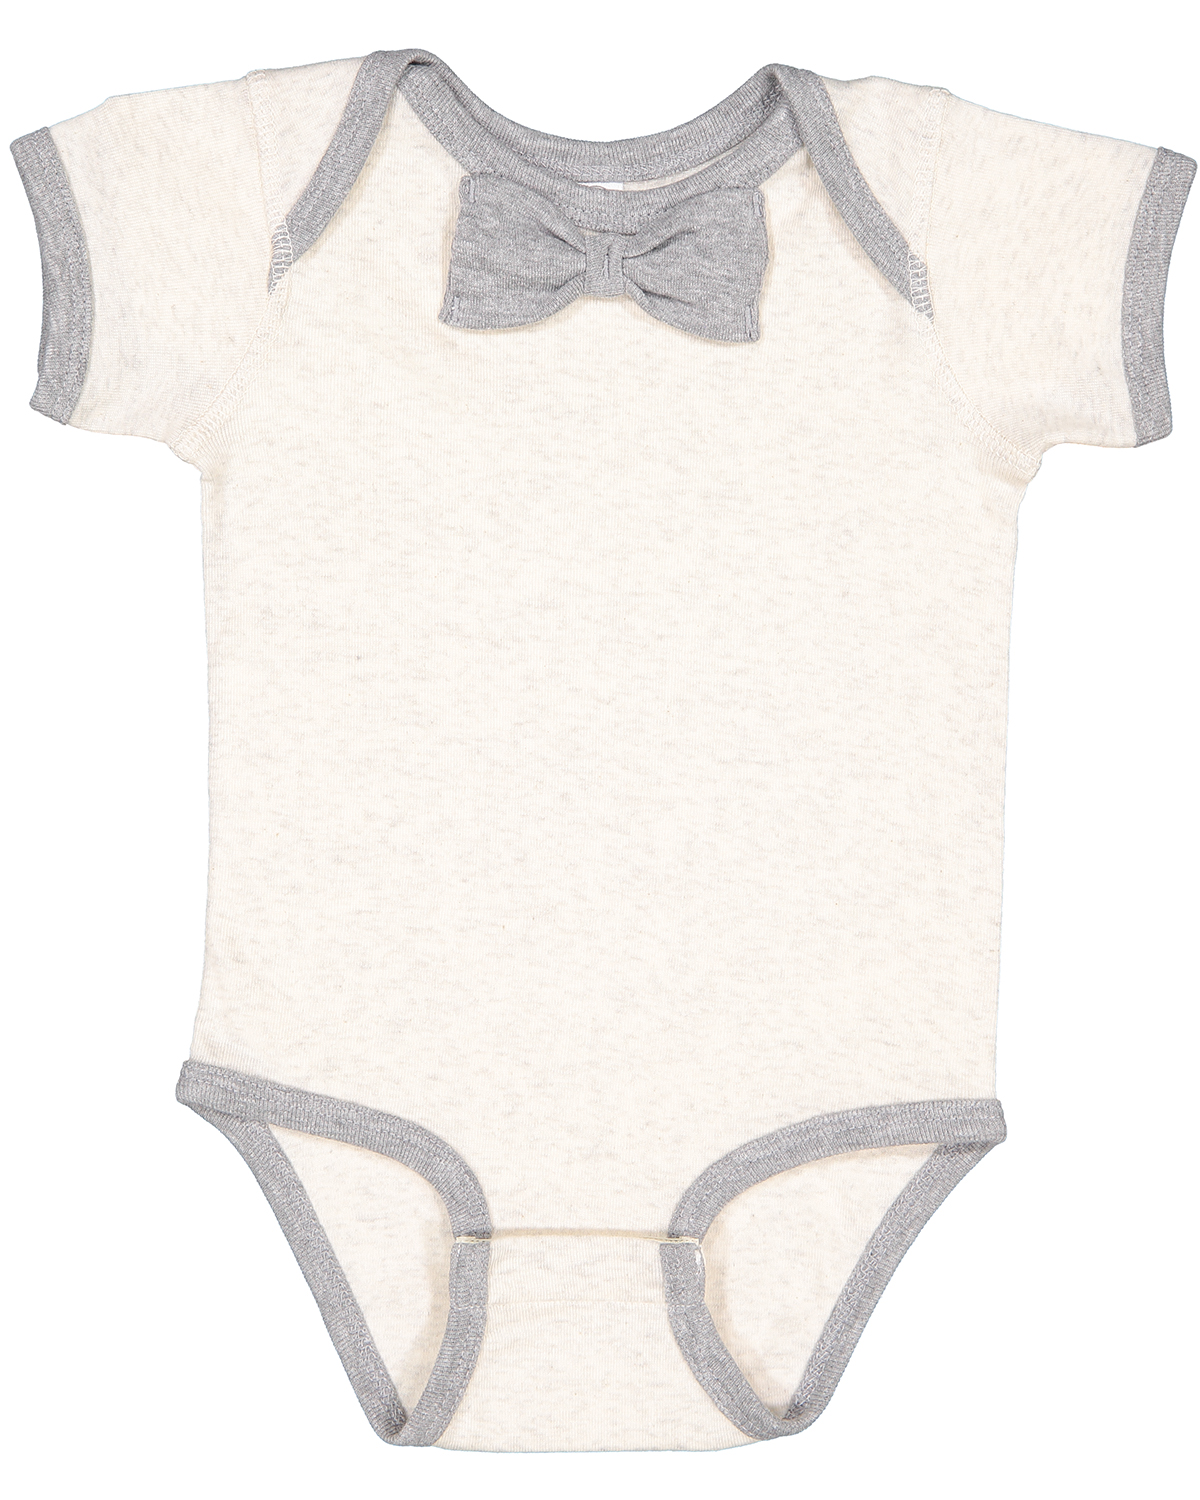 'Rabbit Skins RS4407 Infant Baby Rib Bow Tie Bodysuit'